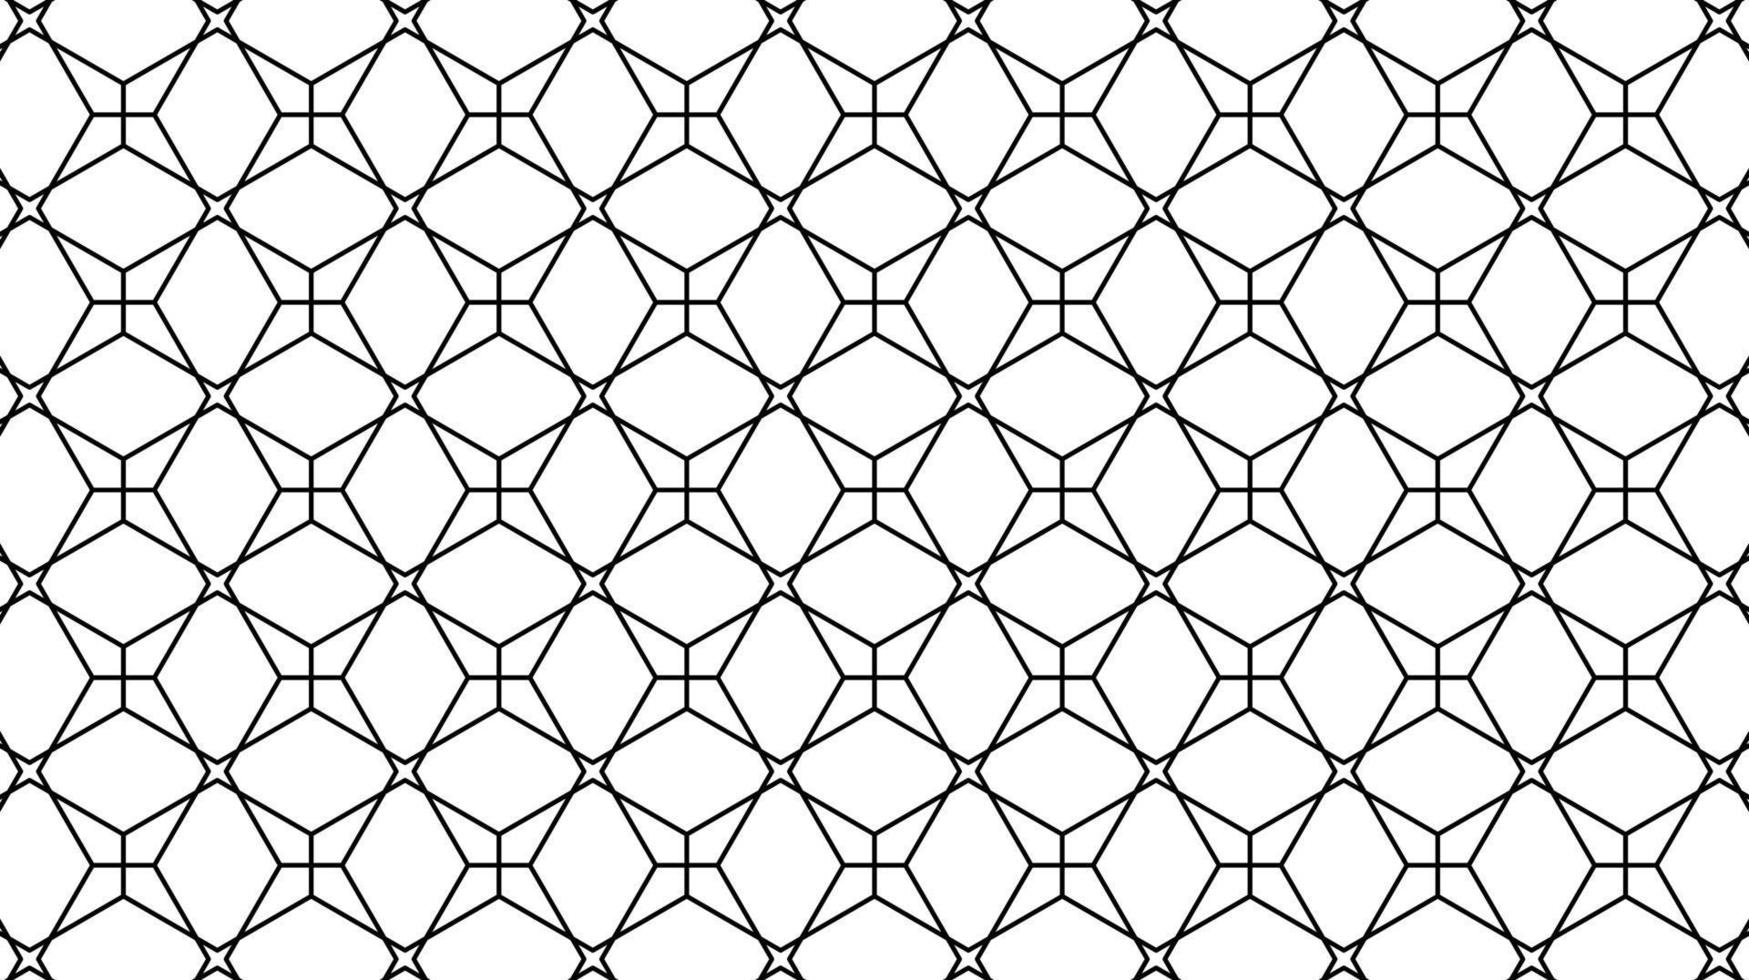 Monochrome star pattern - vector background.